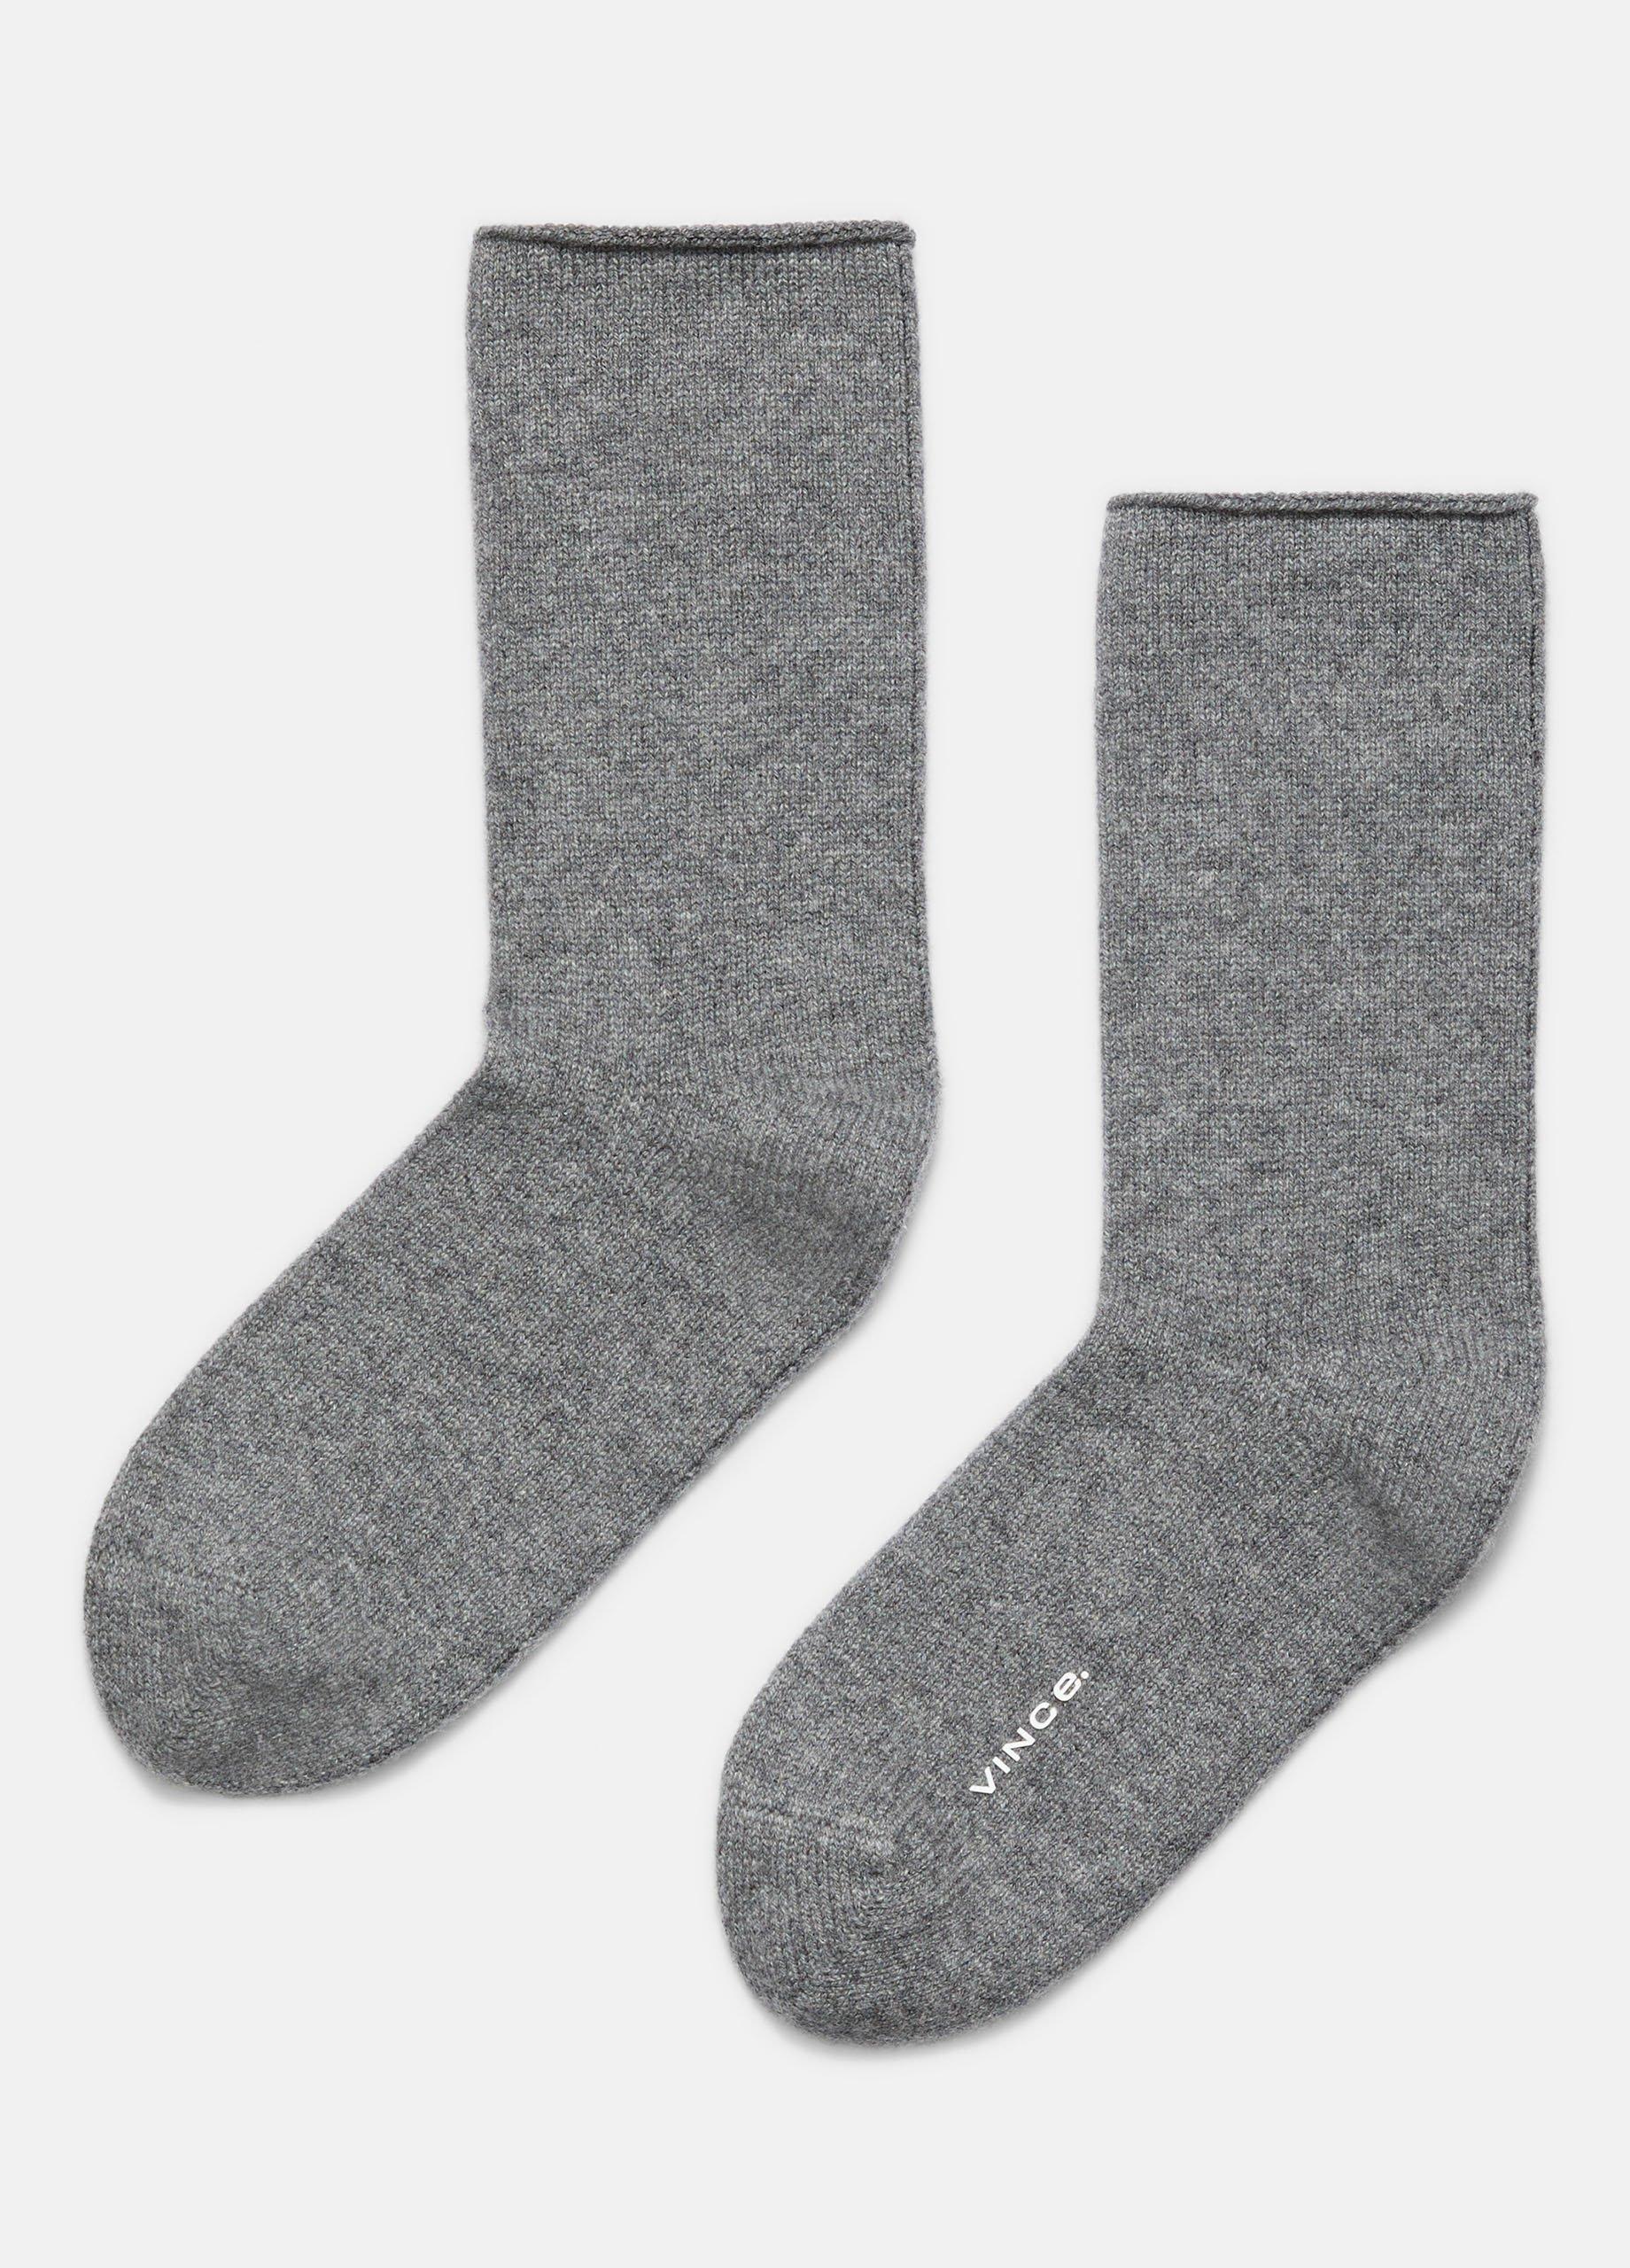 Cashmere Jersey Short Sock, Grey, Size XS/S Vince